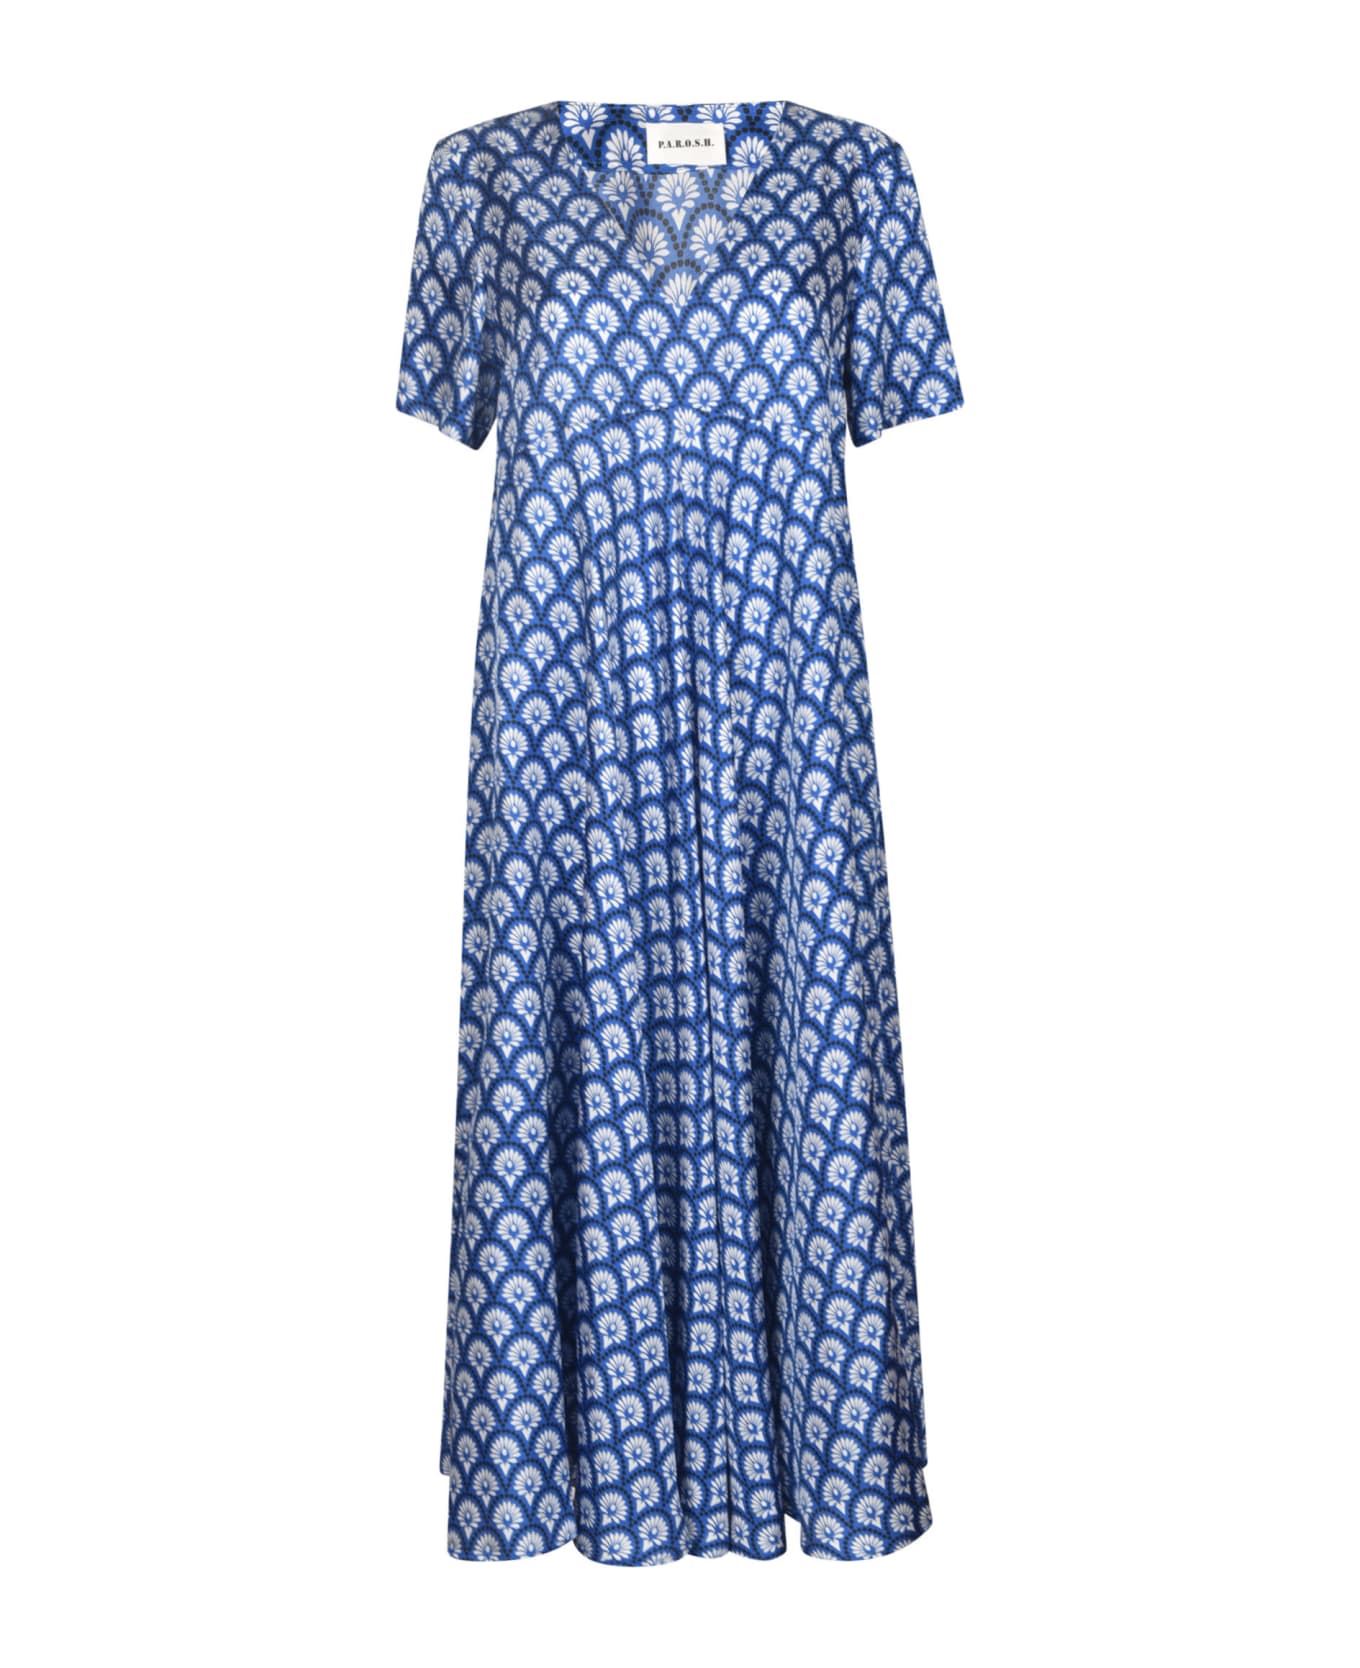 Parosh Monogram Printed Dress - Blue/White